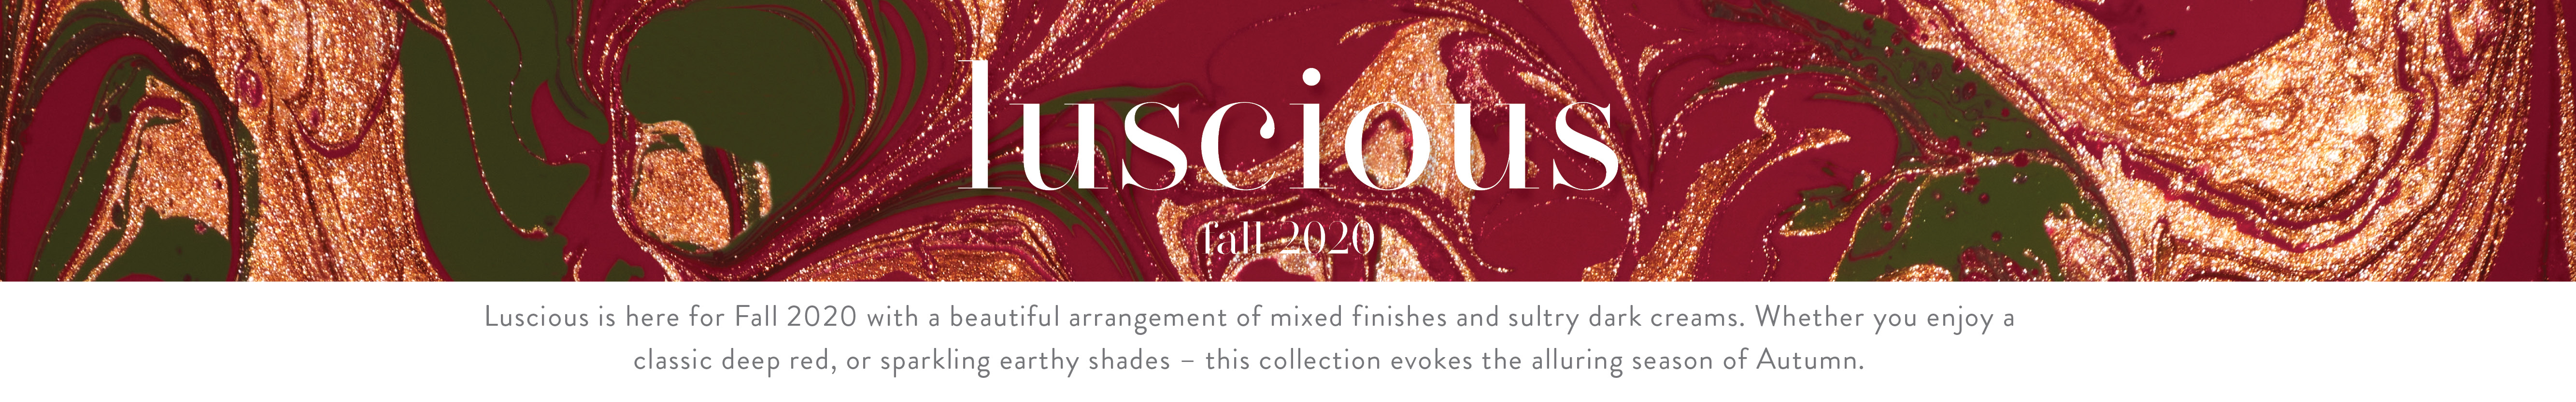 Zoya Fall 2020 - Luscious Collection